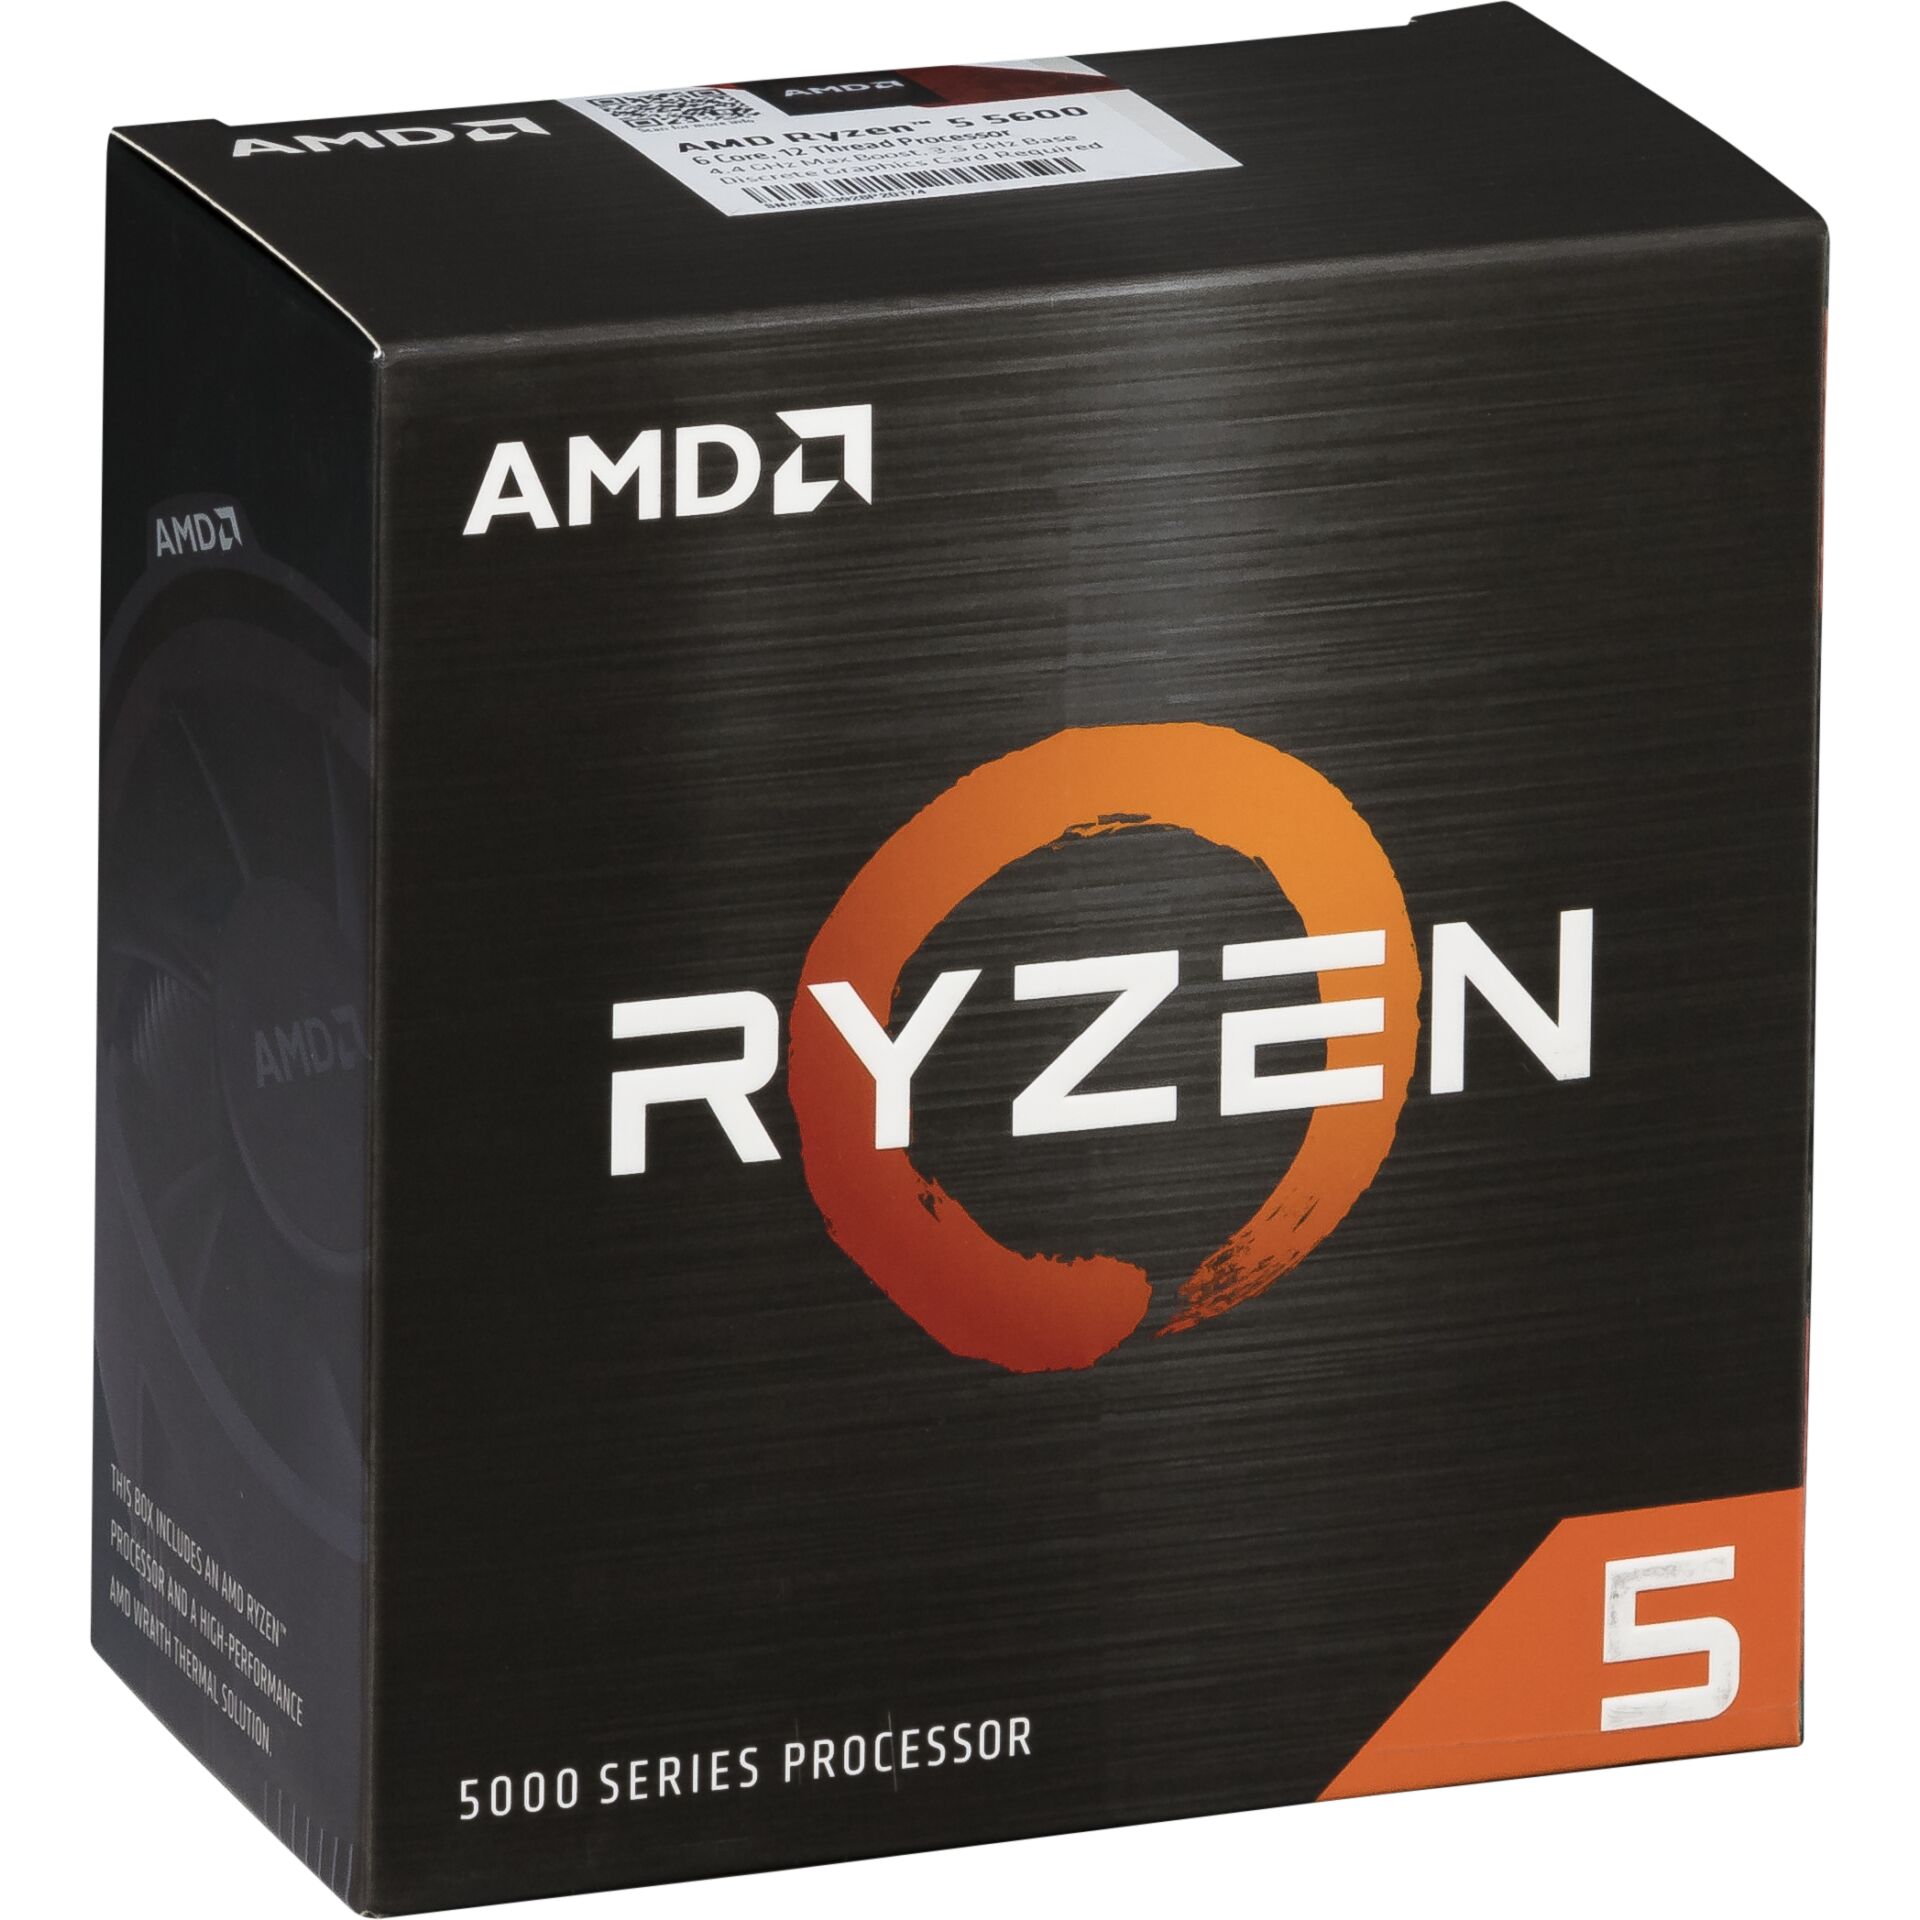 AMD Ryzen 5 5600, 6C/12T, 3.50-4.40GHz, boxed, Sockel AM4 (PGA), Vermeer CPU